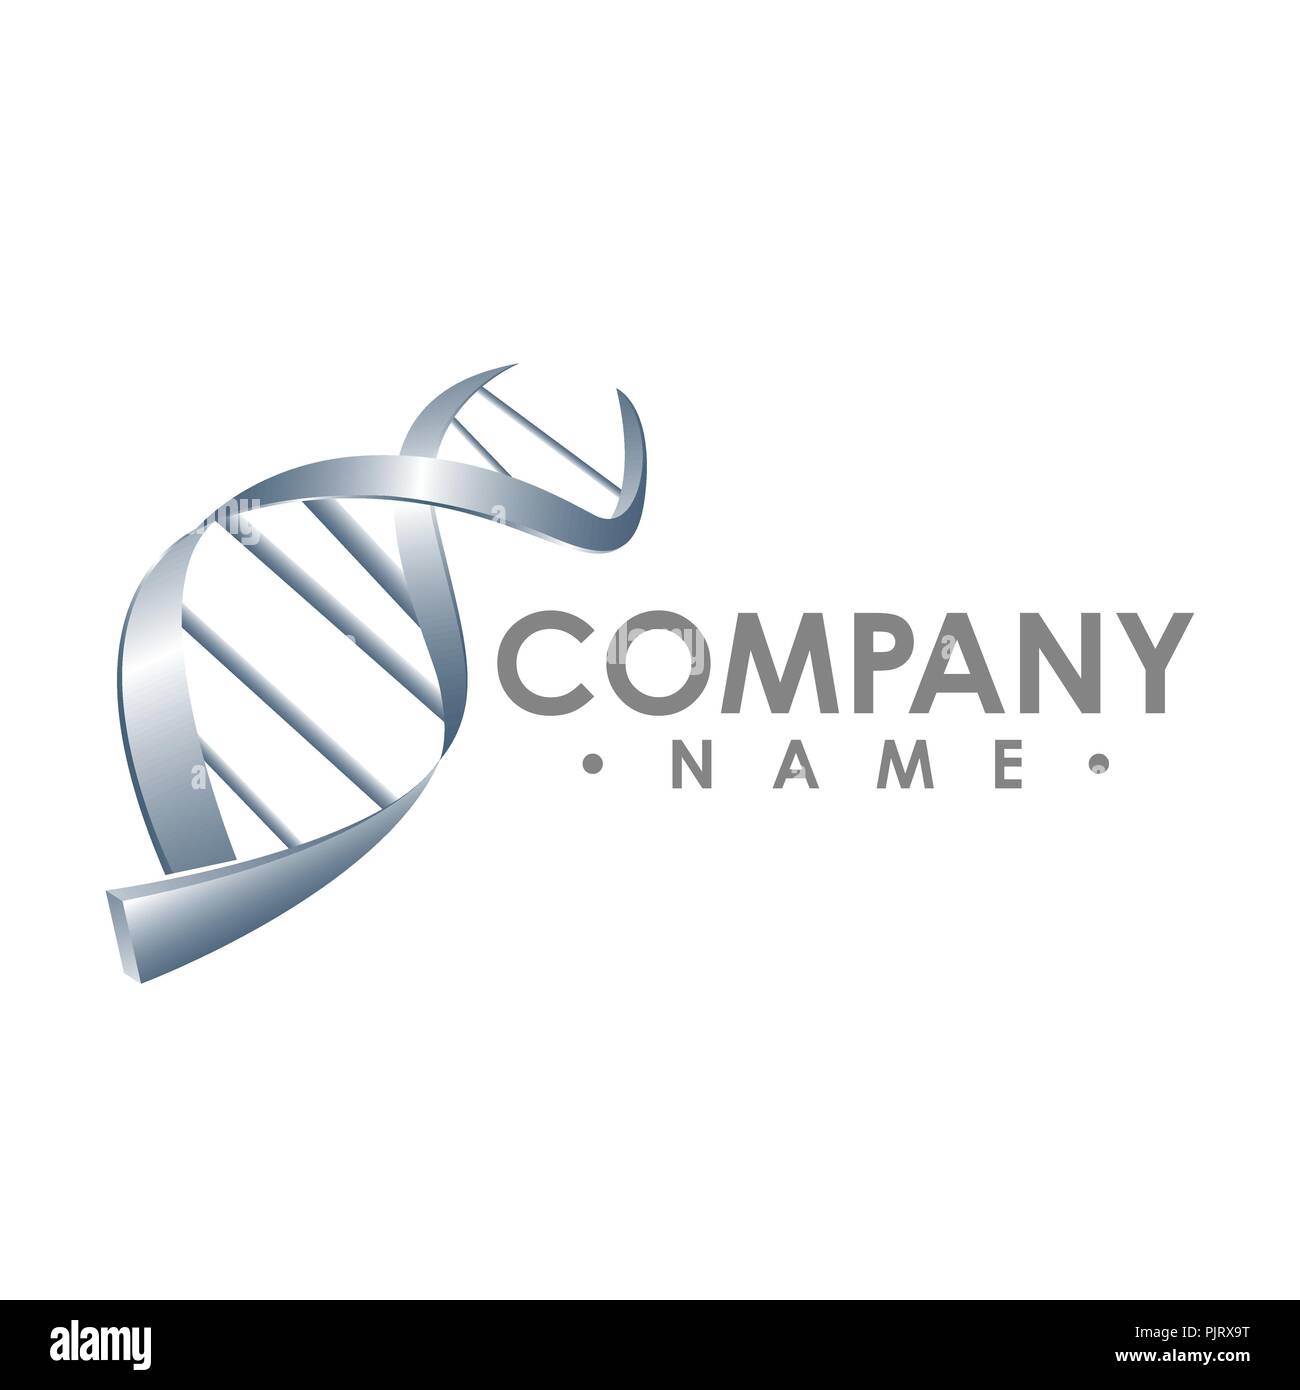 DNA-Sequenz Licht 3d-Flachbild Vector Illustration kunst Pädagogische logo Medizin Center Healthcare Stock Vektor